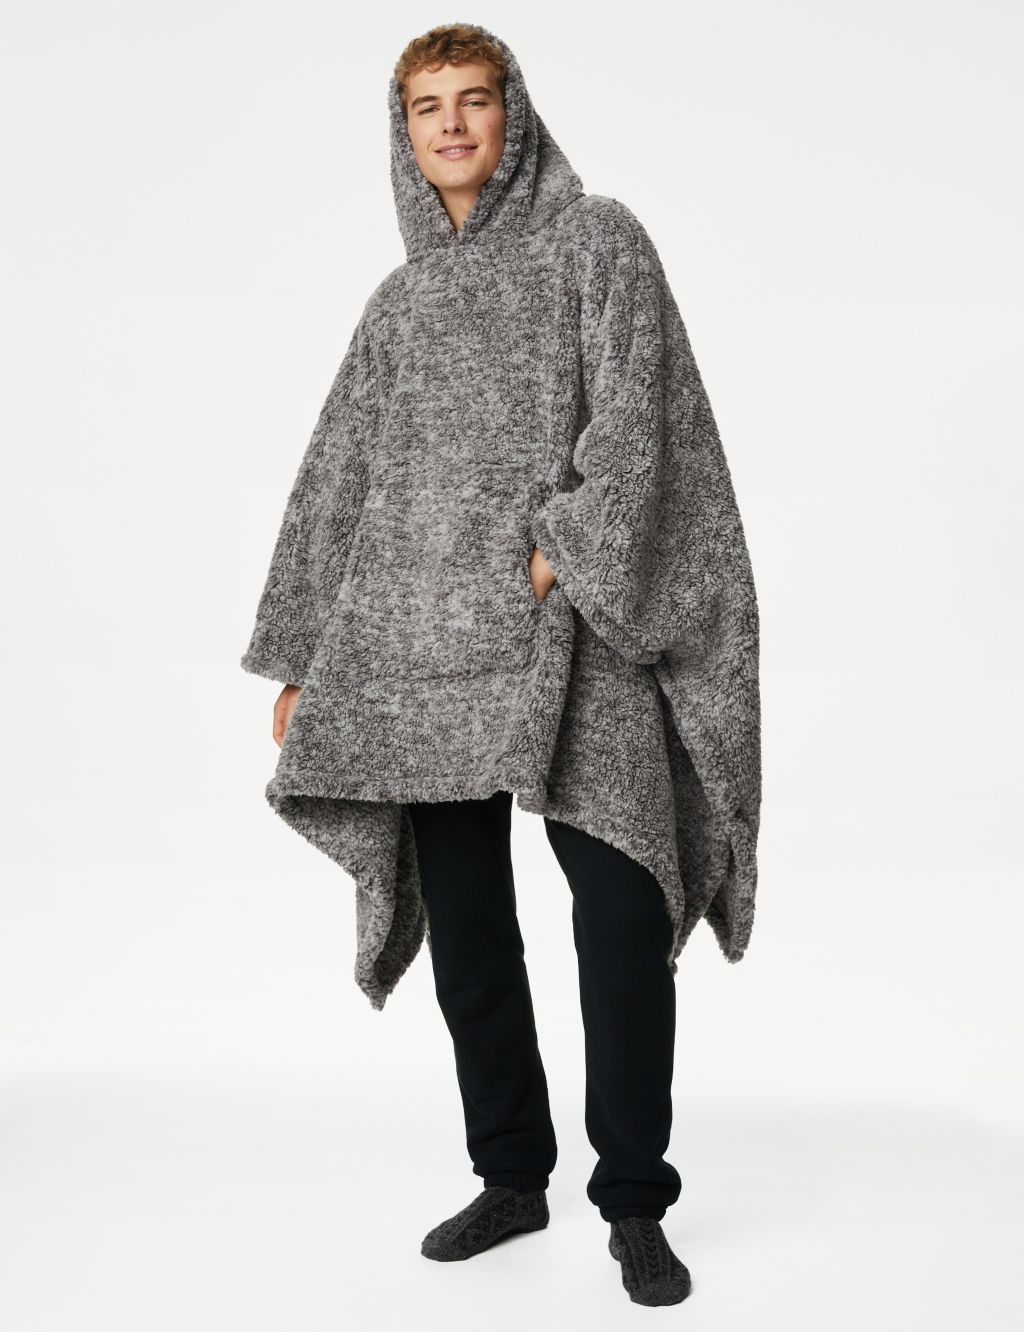 Blanket poncho with hood